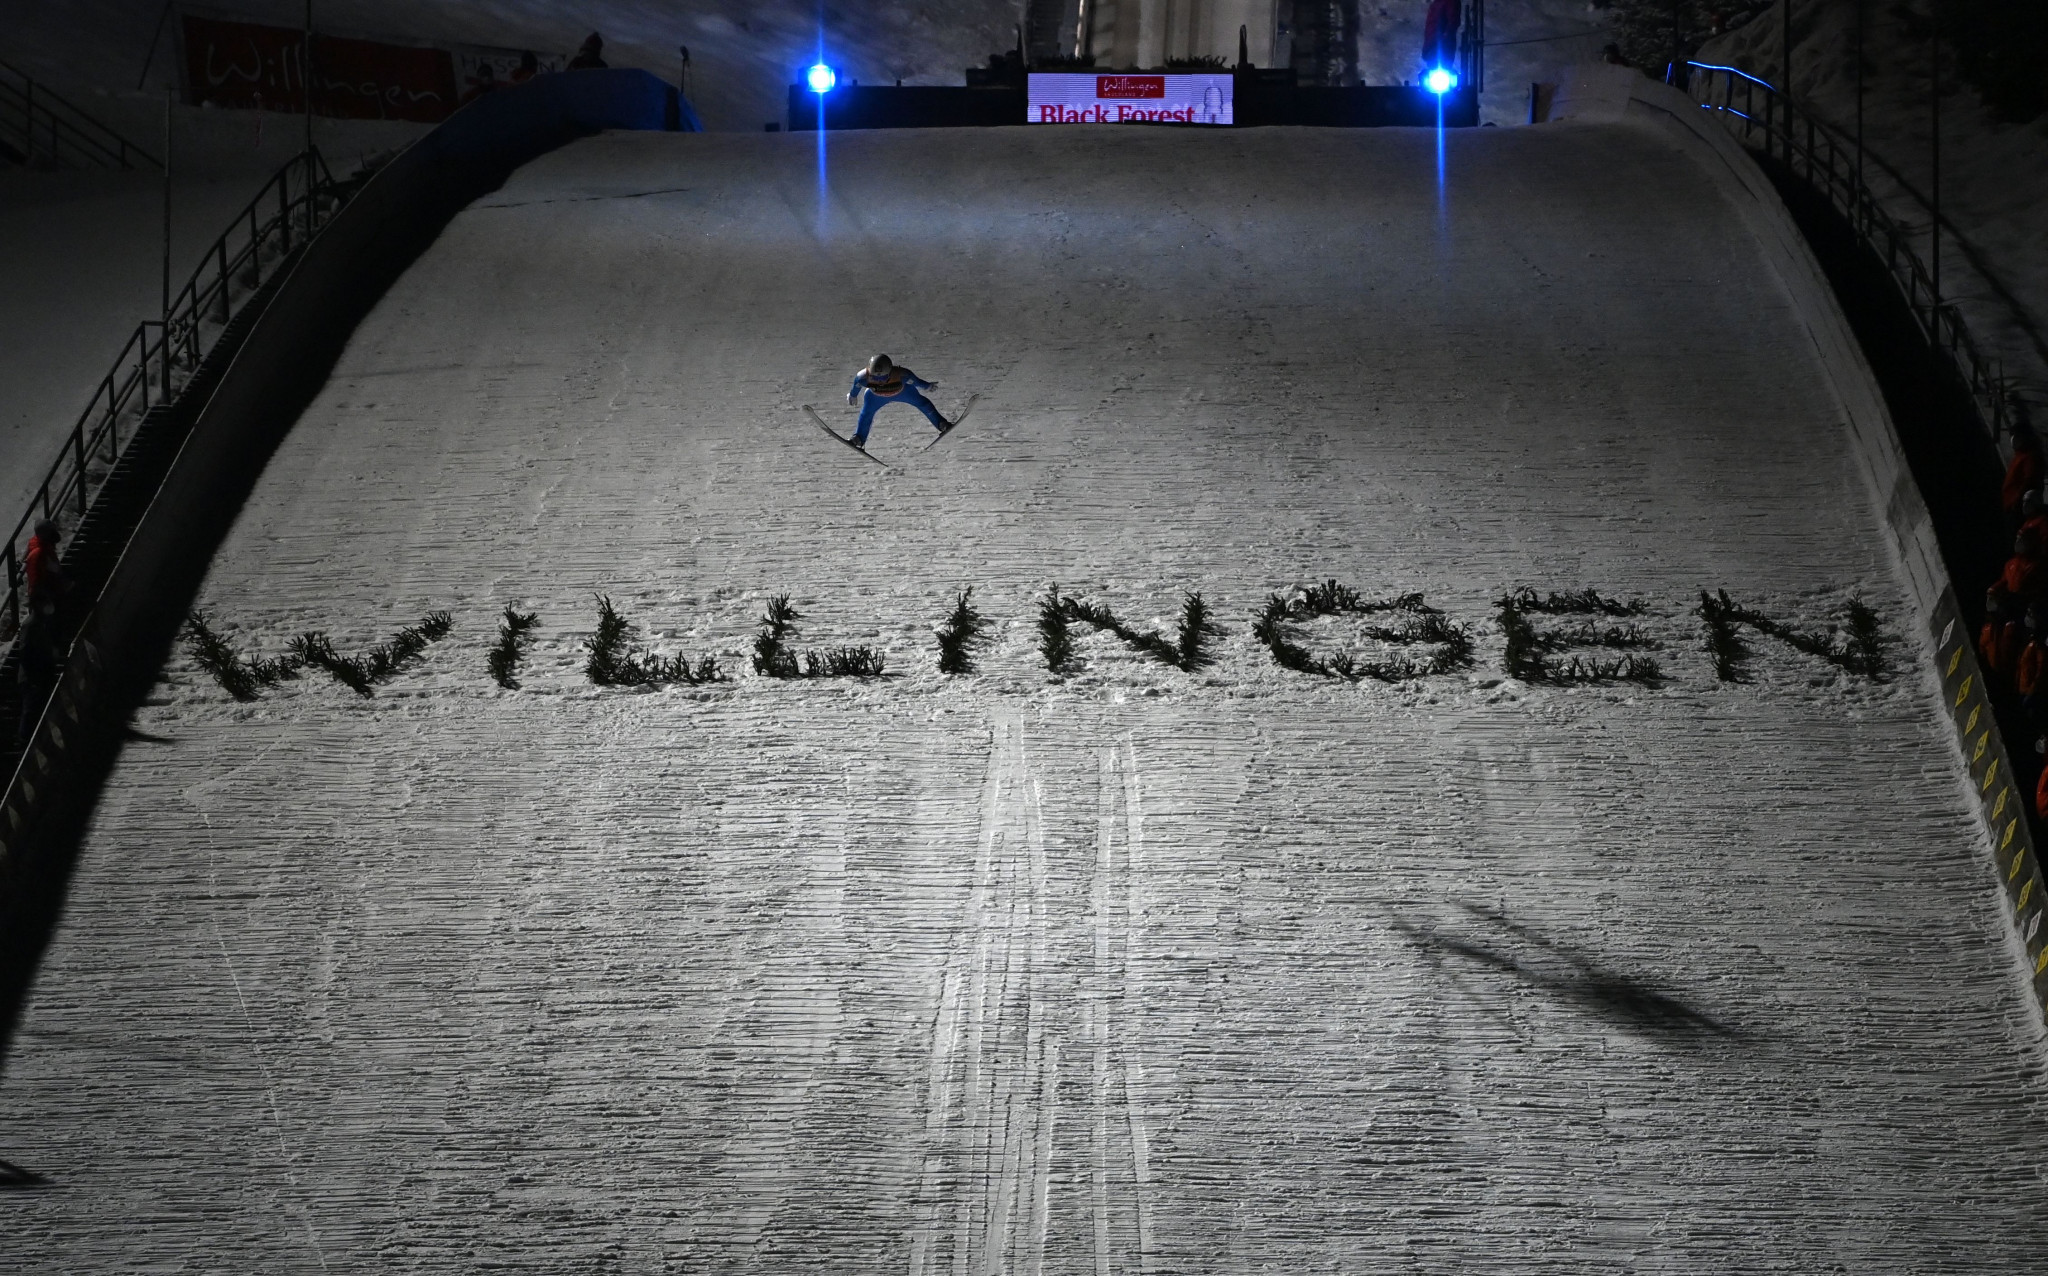 Granerud wins seventh FIS Ski Jumping World Cup of season in Willingen